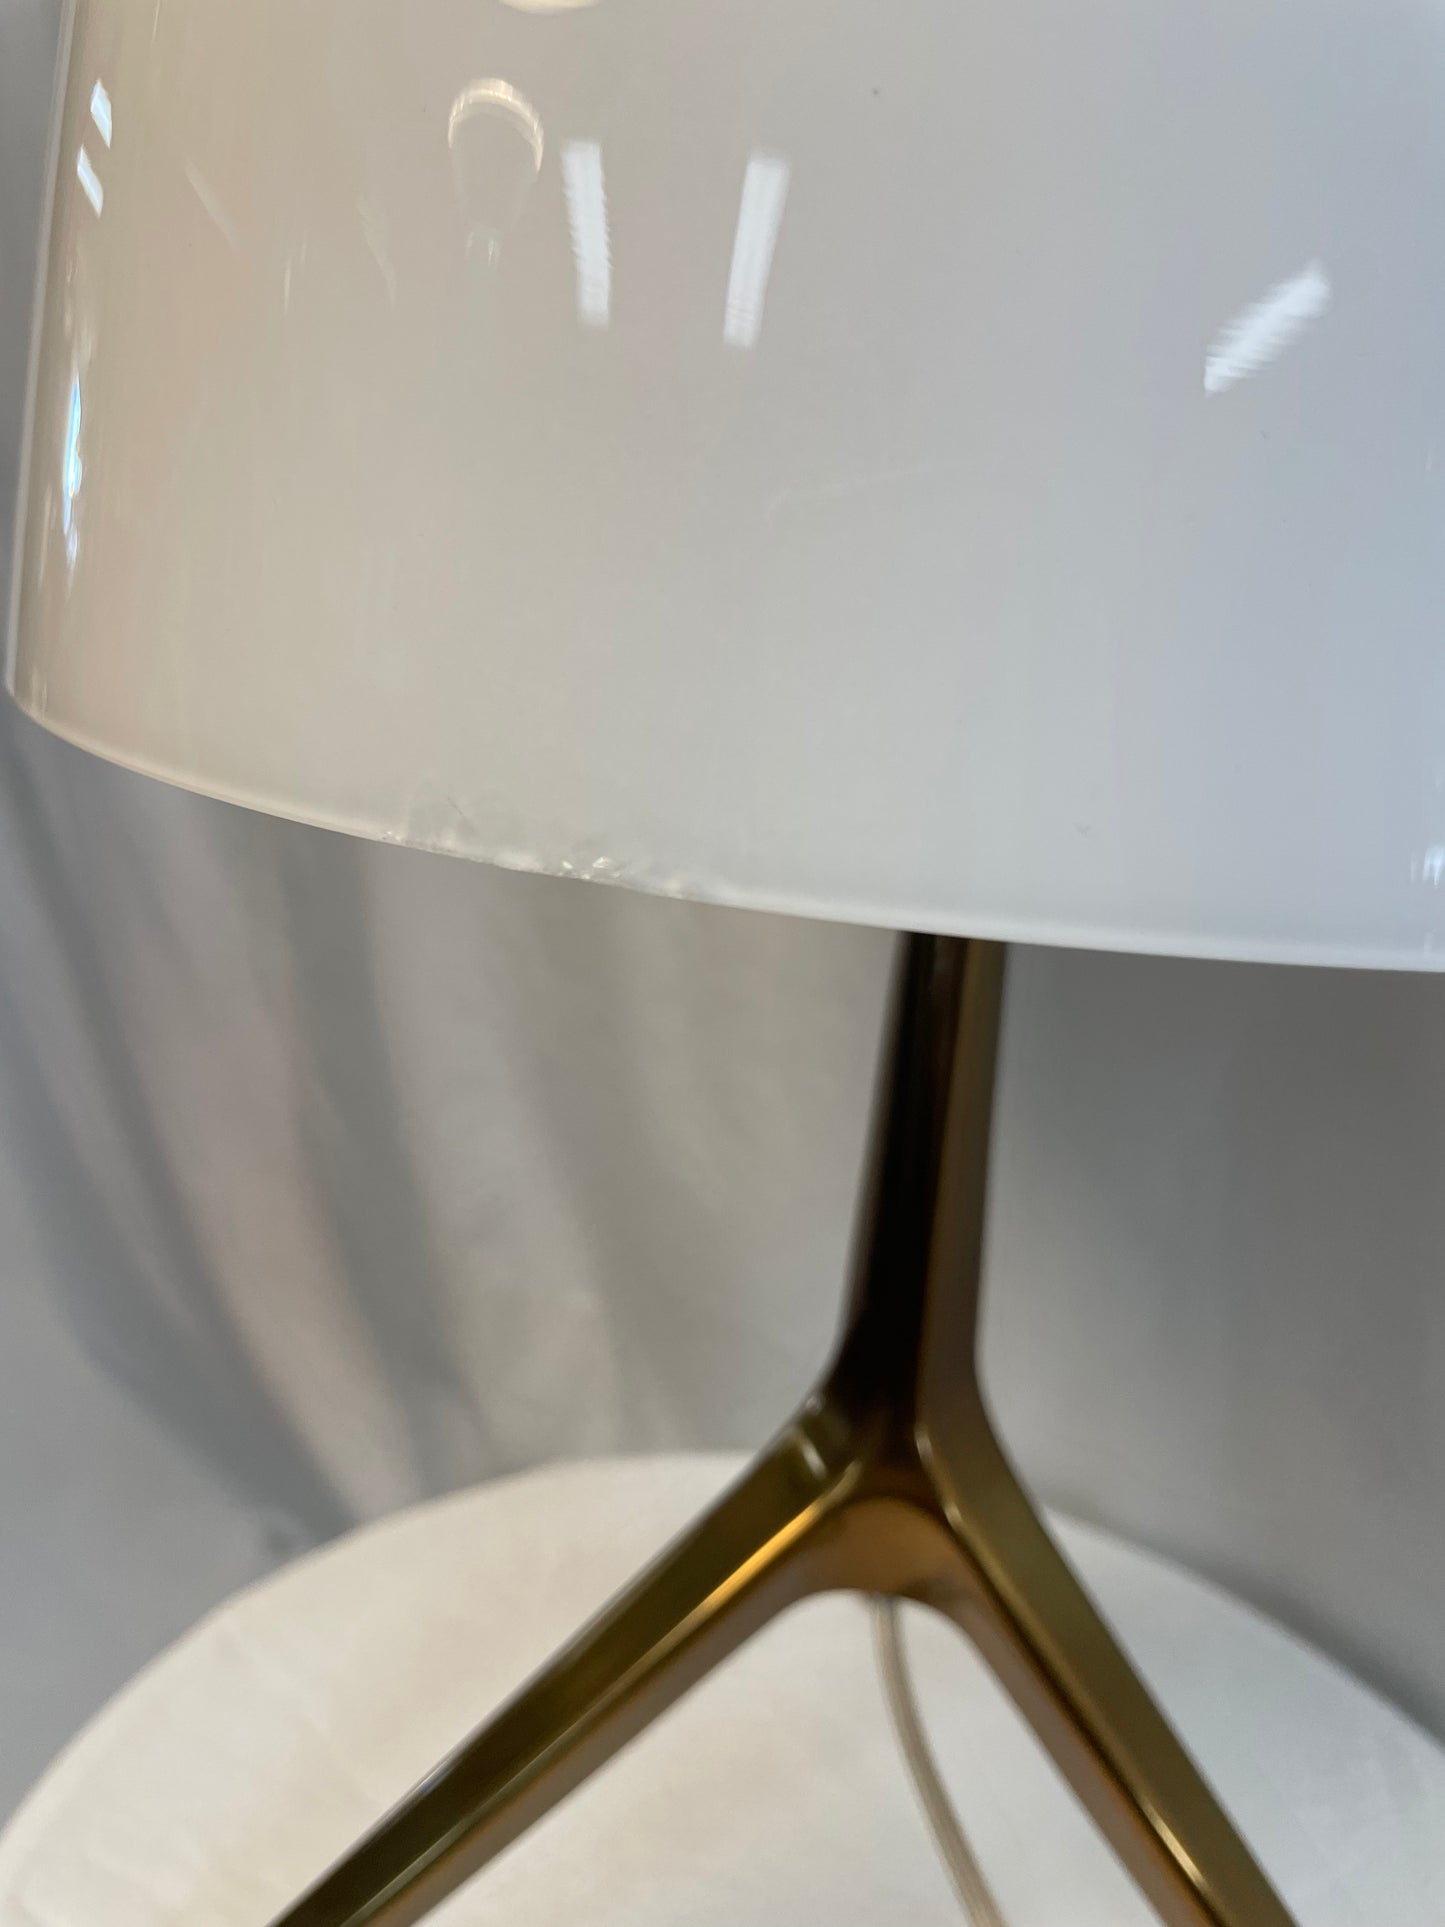 Lumiere XXS Table Lamp by Foscarini